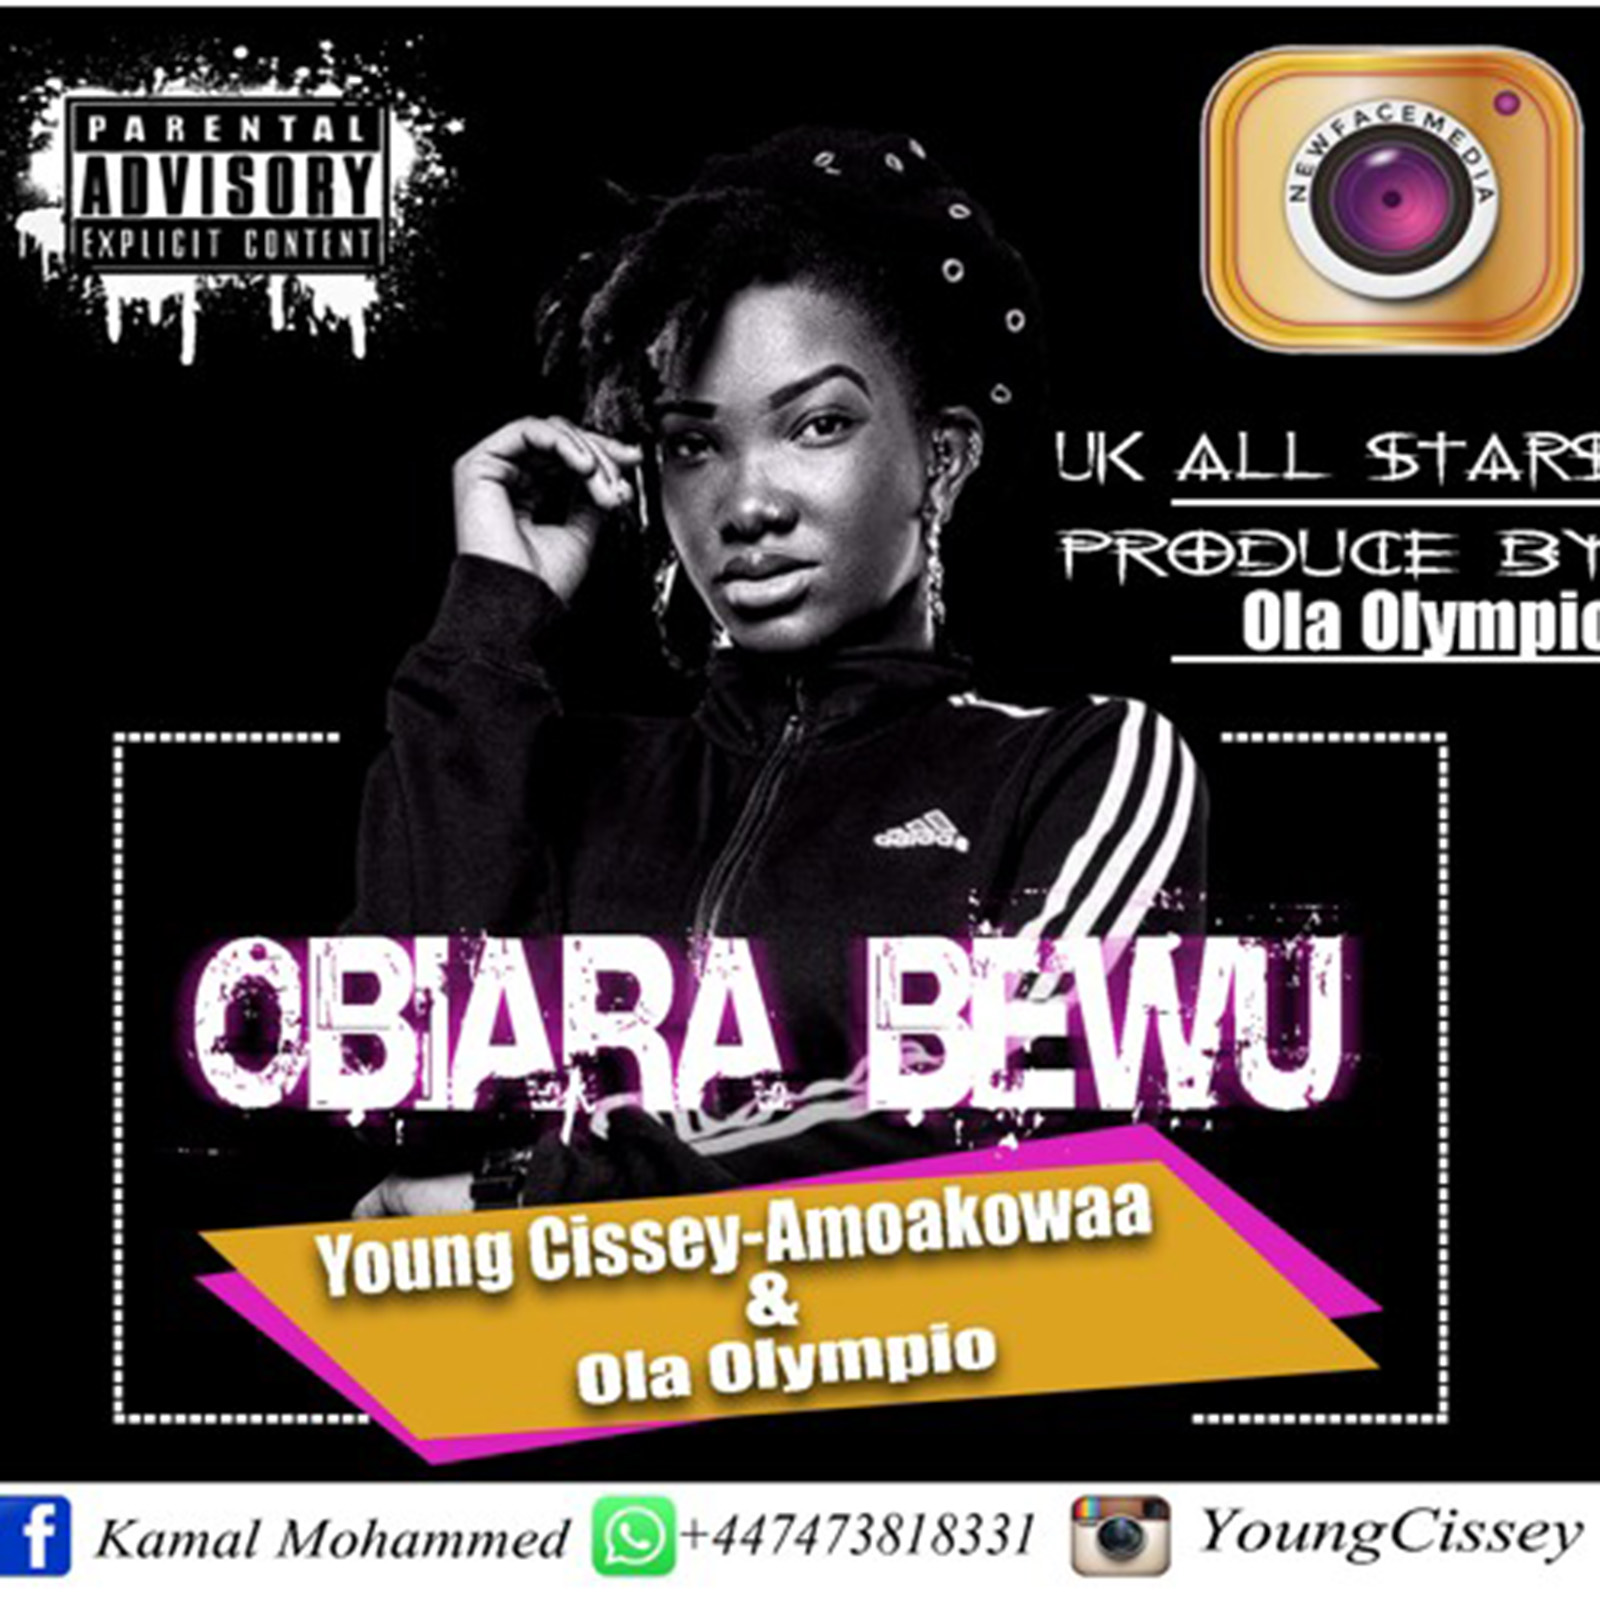 Obiara Bewu (Ebony Tribute) by Yong Cissey & Amoakowaa (UK All Stars)